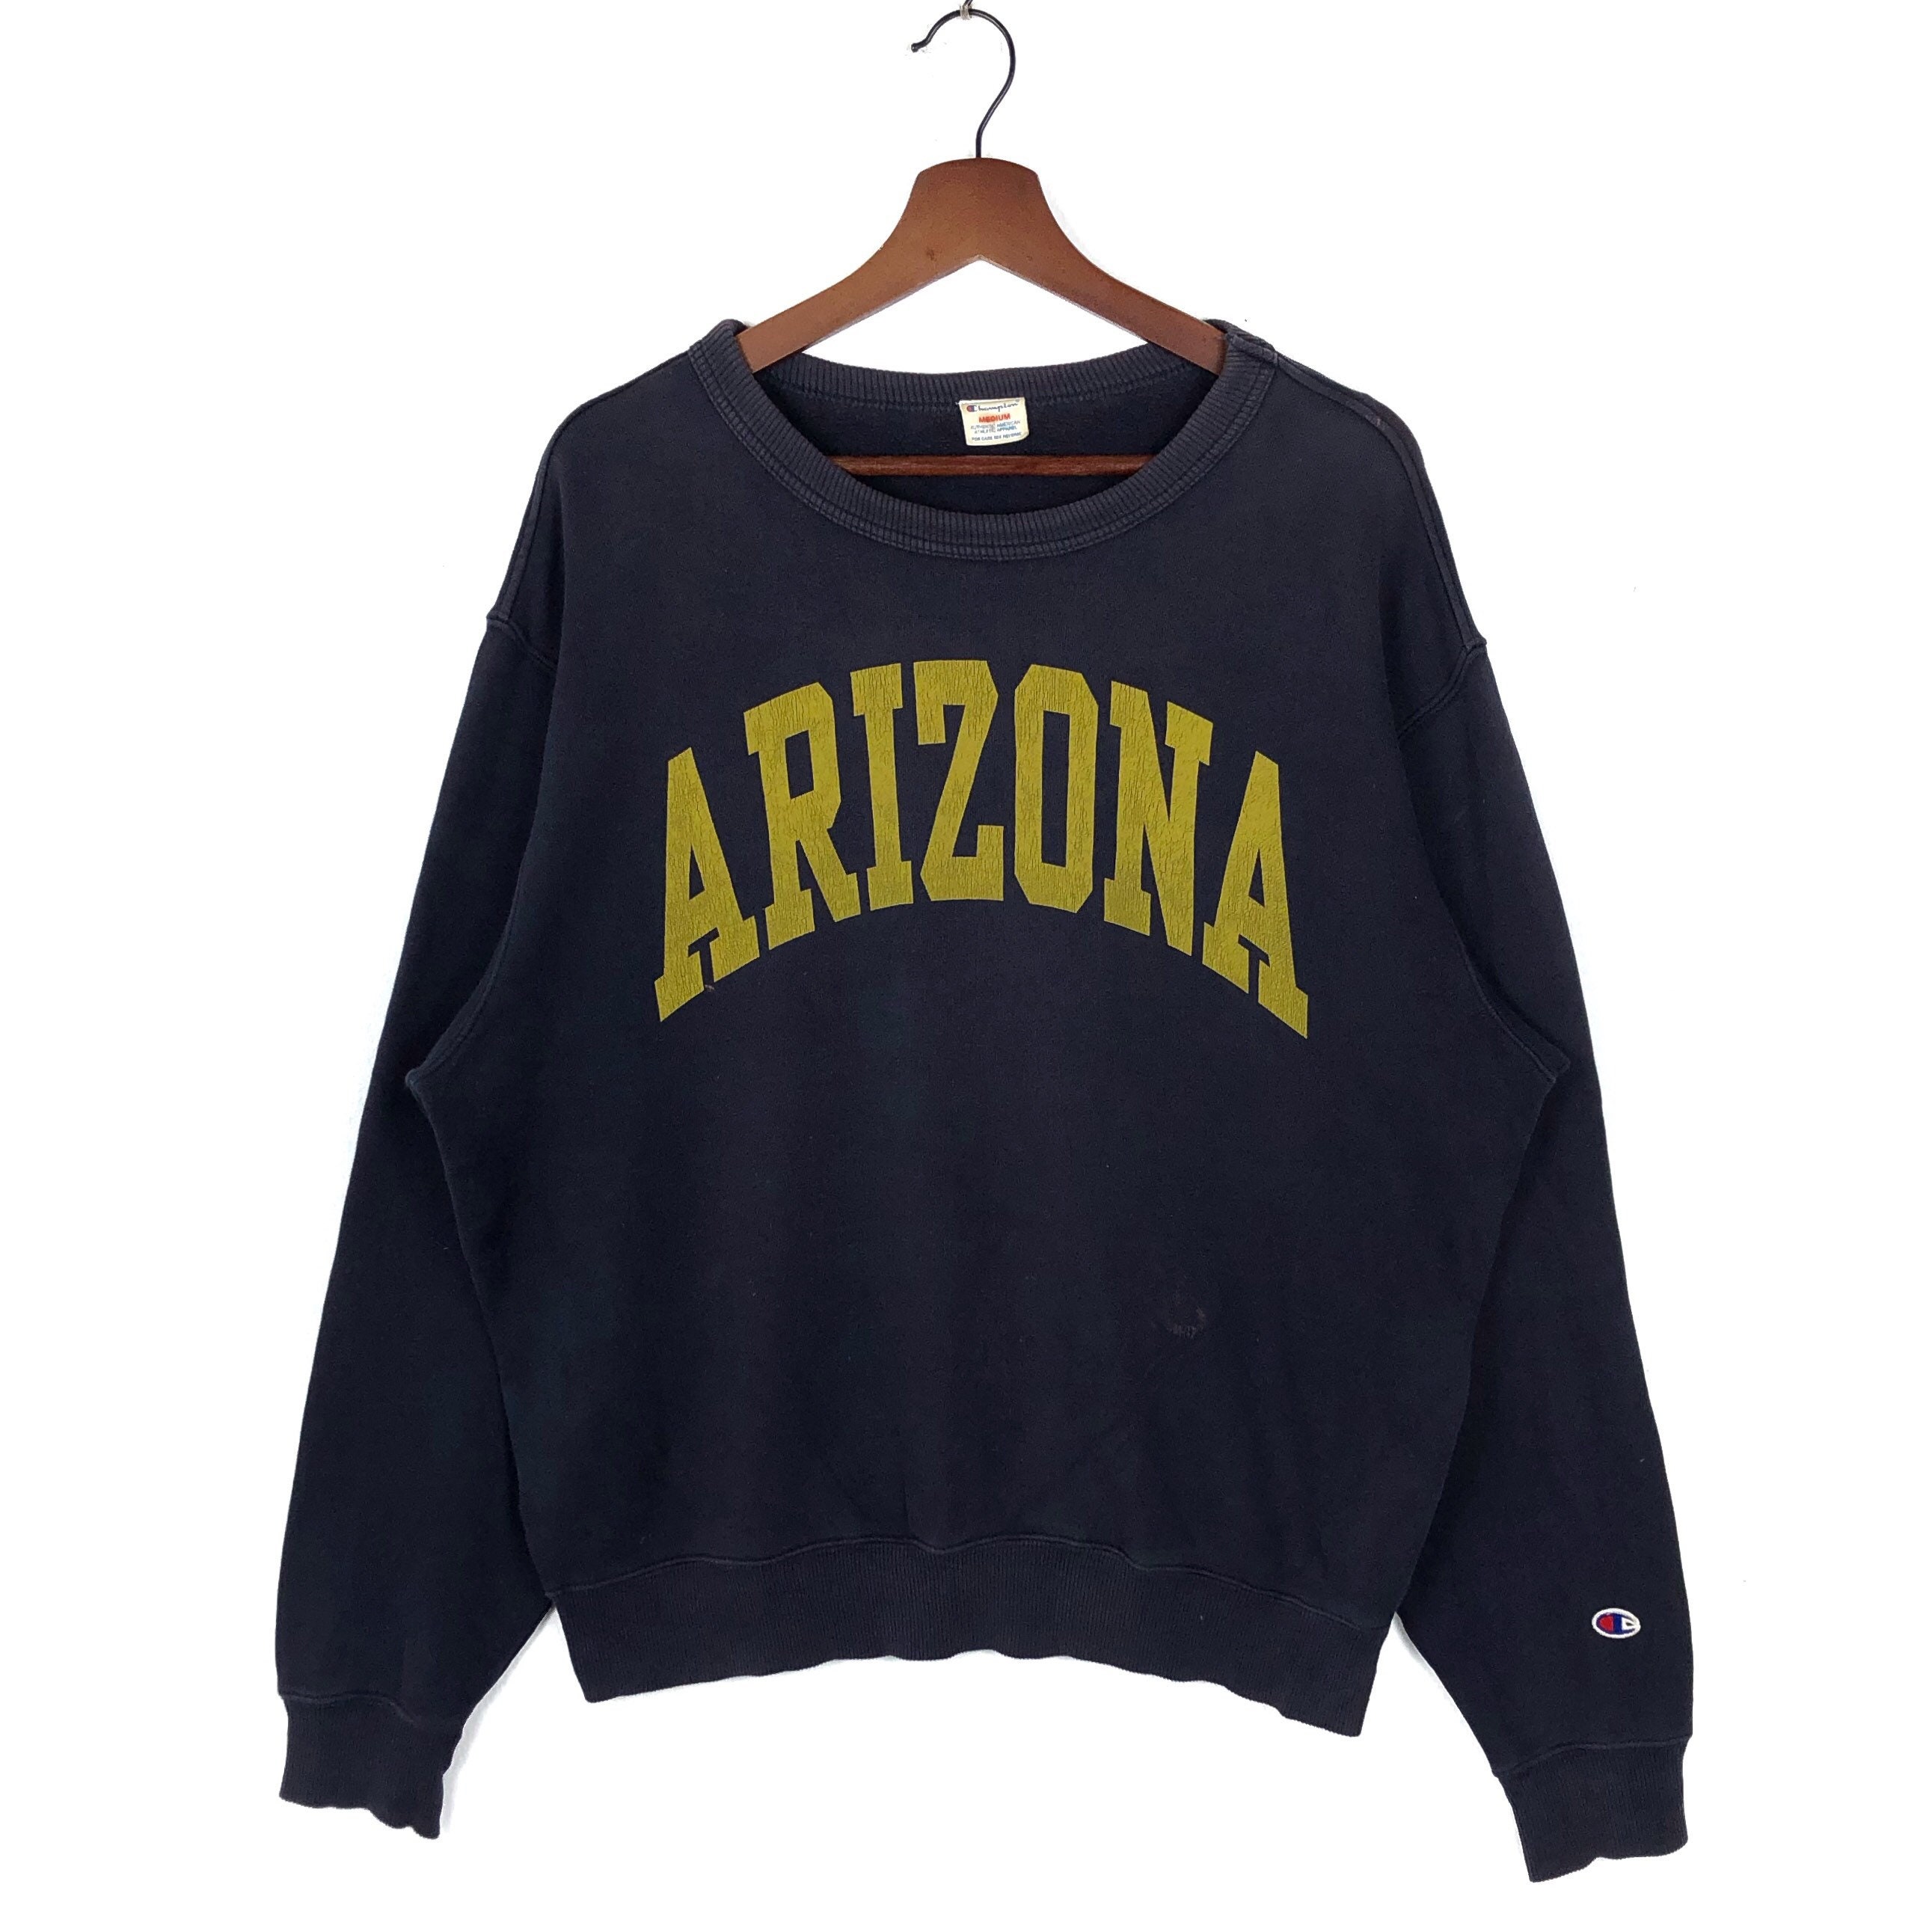 Vintage Arizona State Sweatshirt by Champion Sweatshirt - Etsy